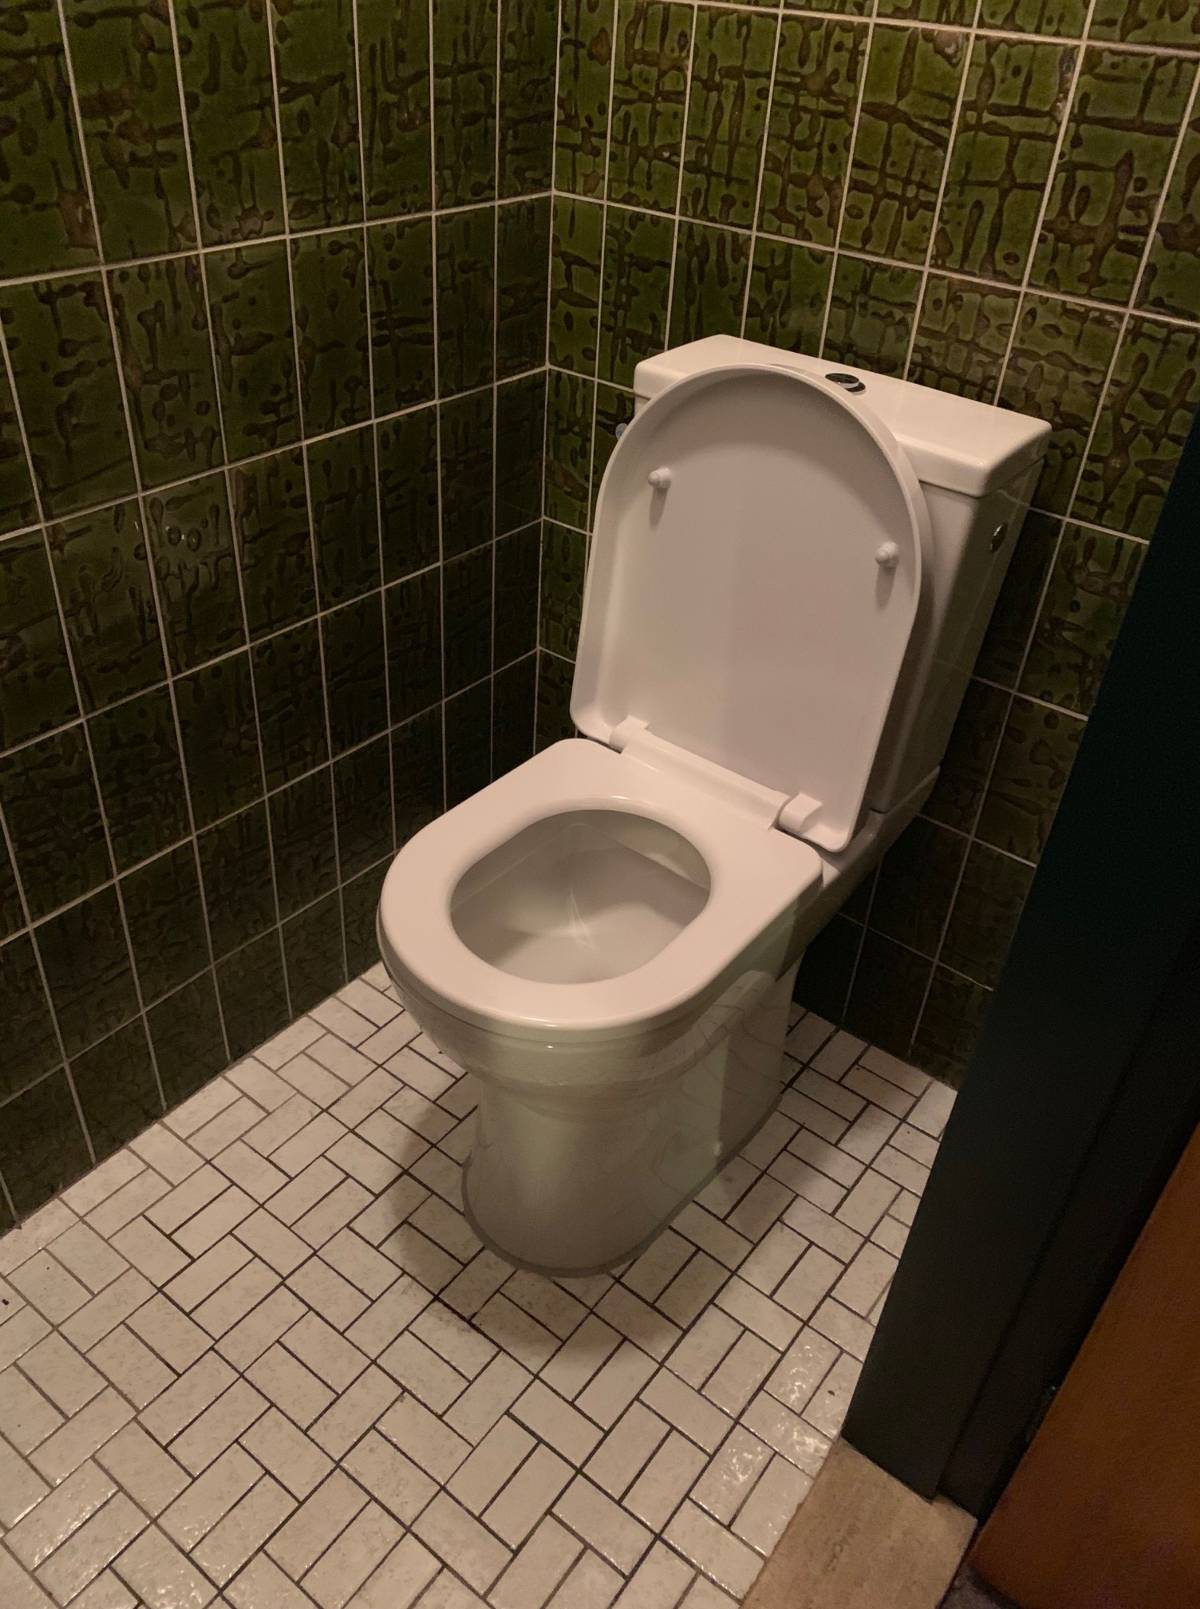 verhoogd toilet